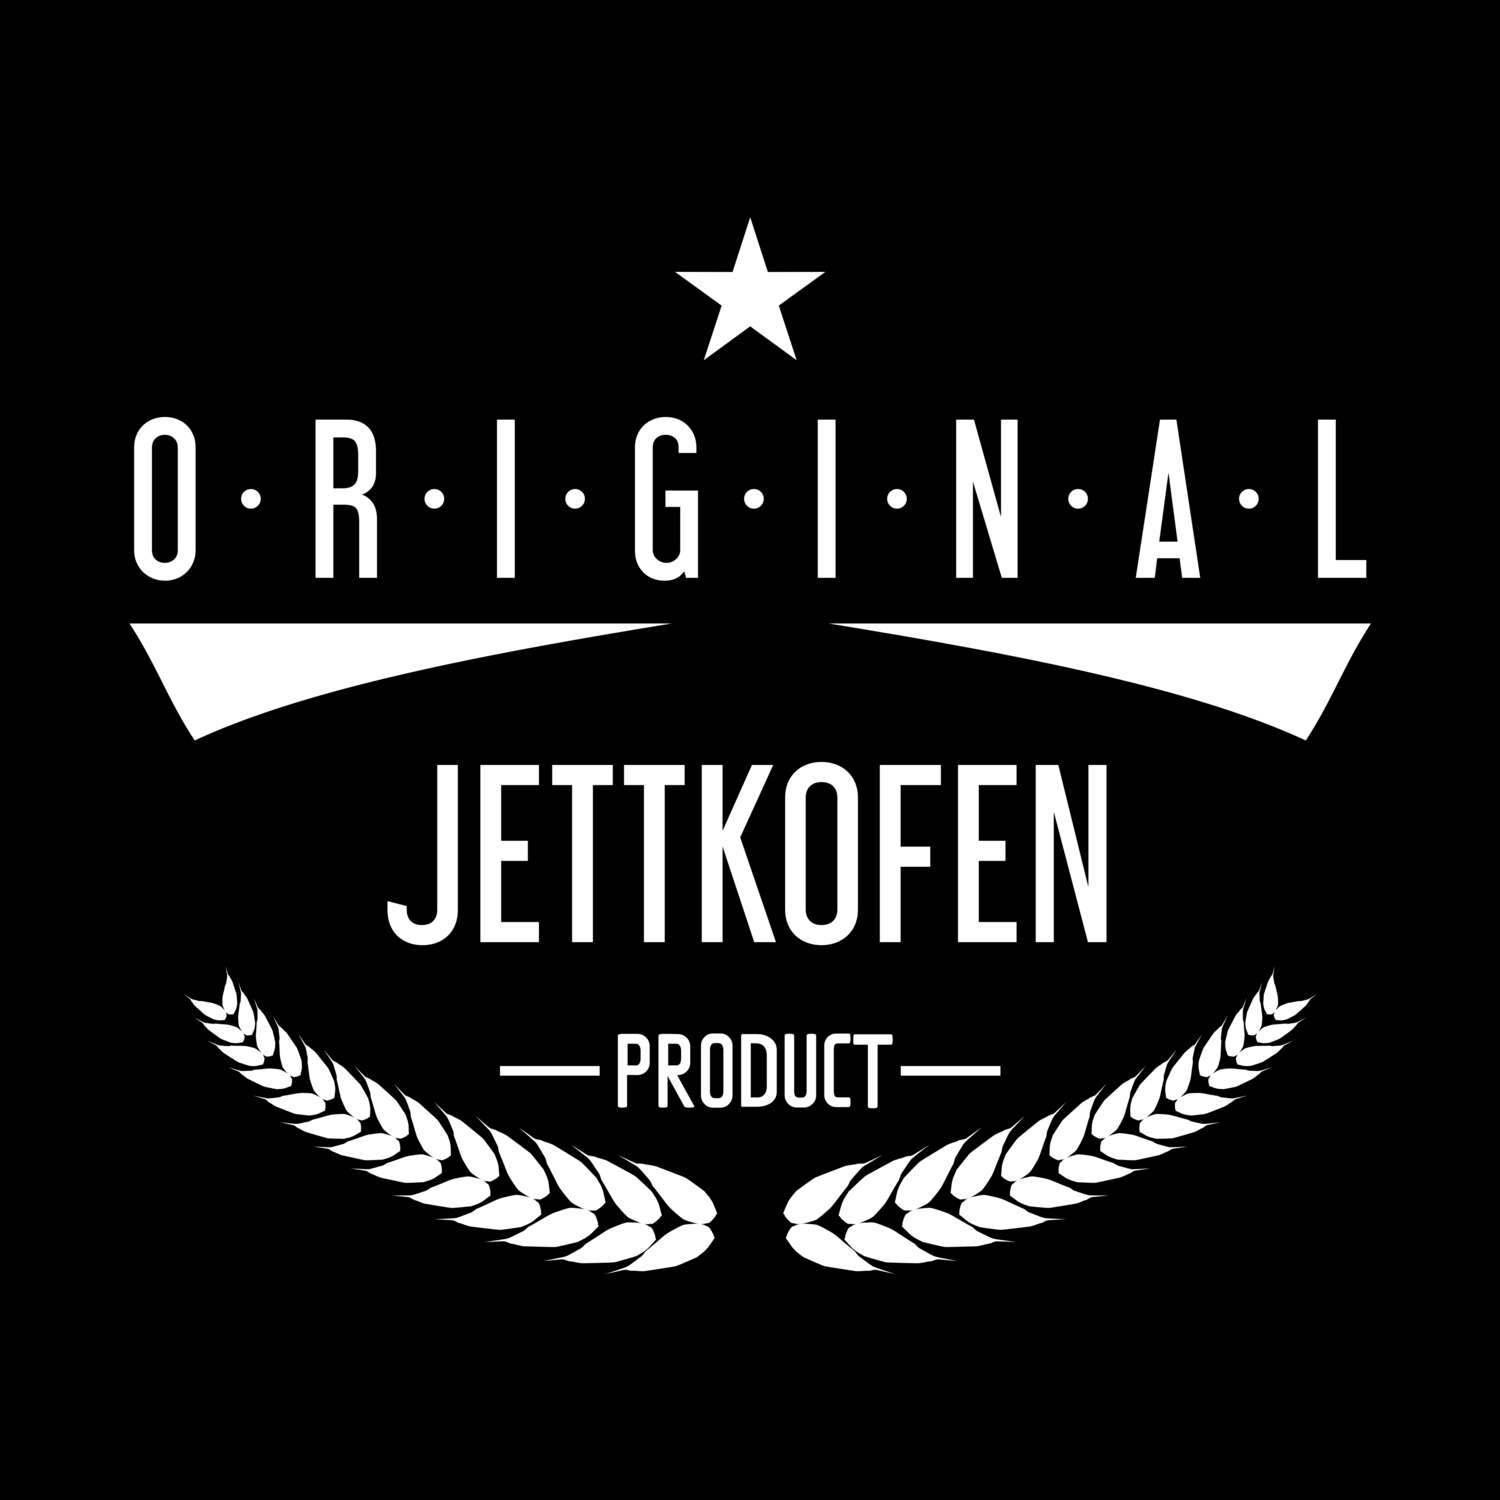 Jettkofen T-Shirt »Original Product«